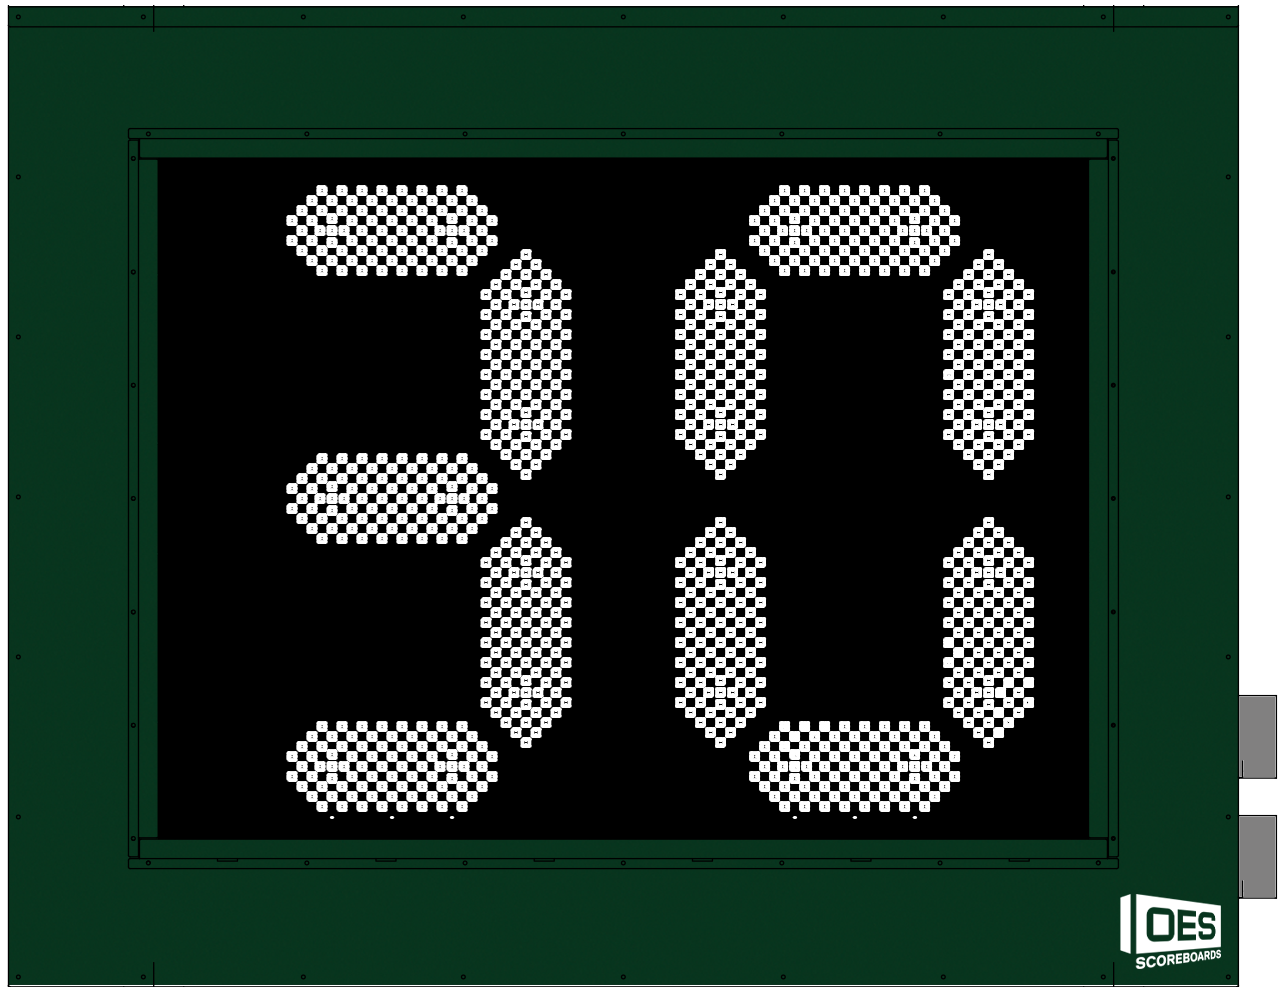 British Game Show Clock Countdown GIF